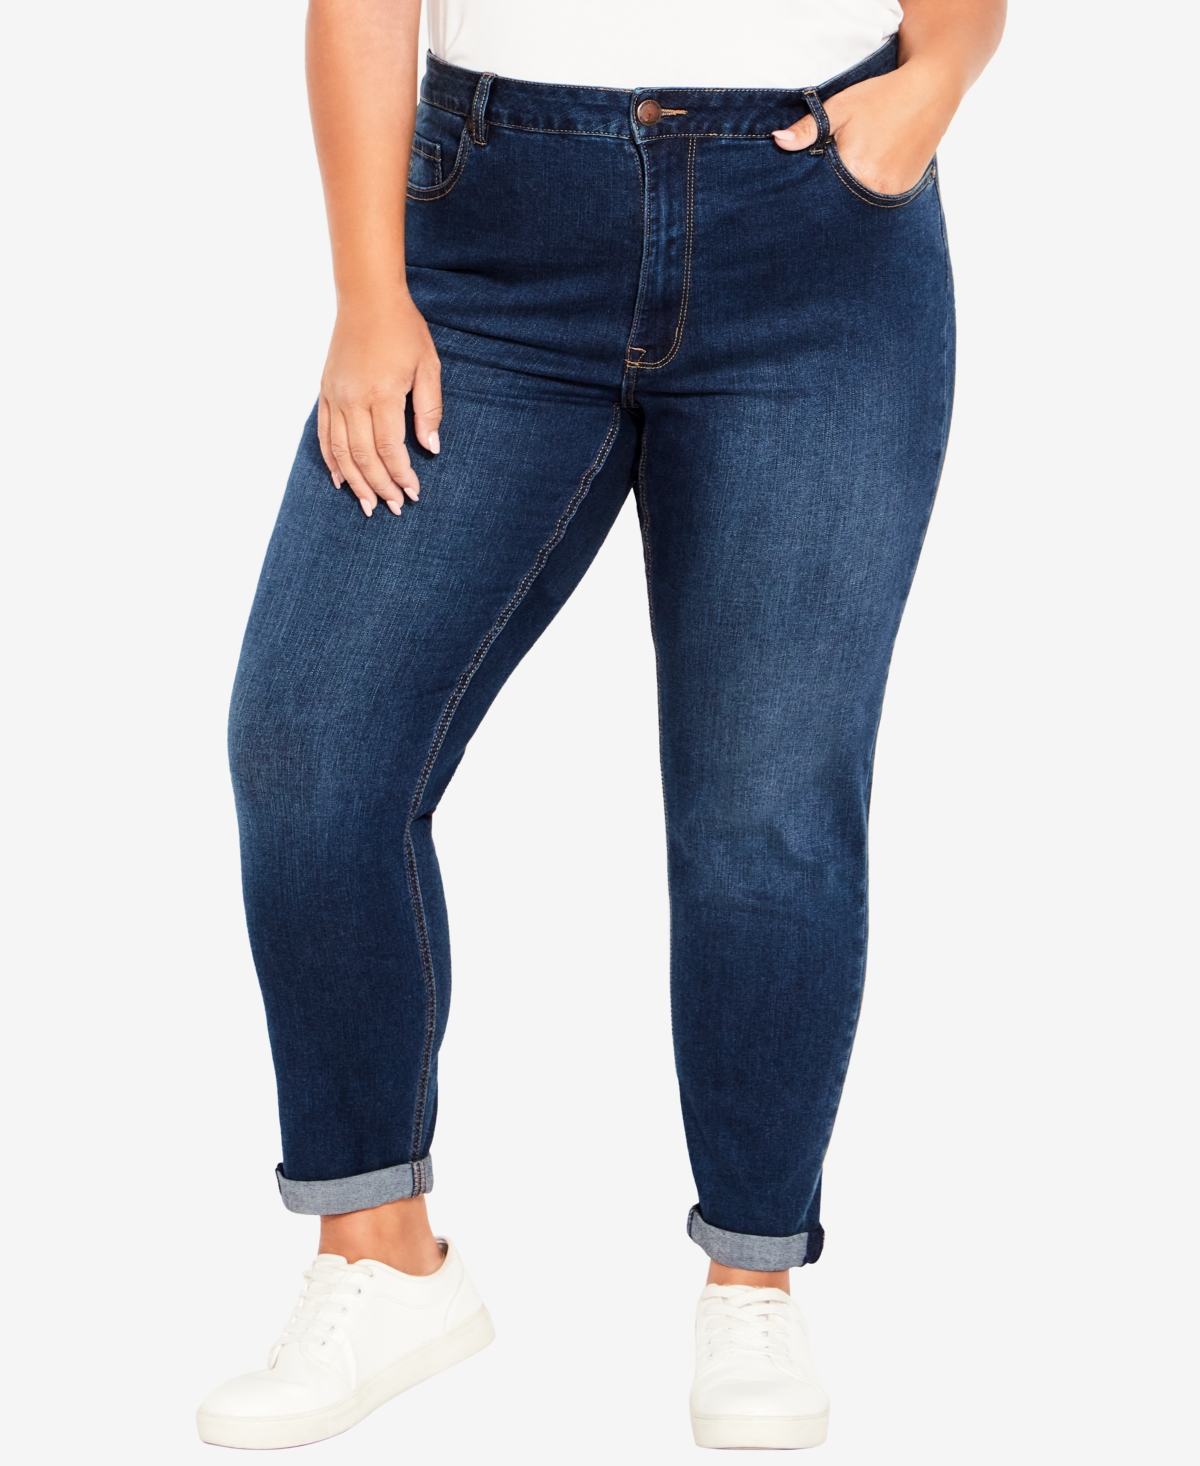 Plus Size Girlfriend Stretch Regular Length Jean - Medium Wash